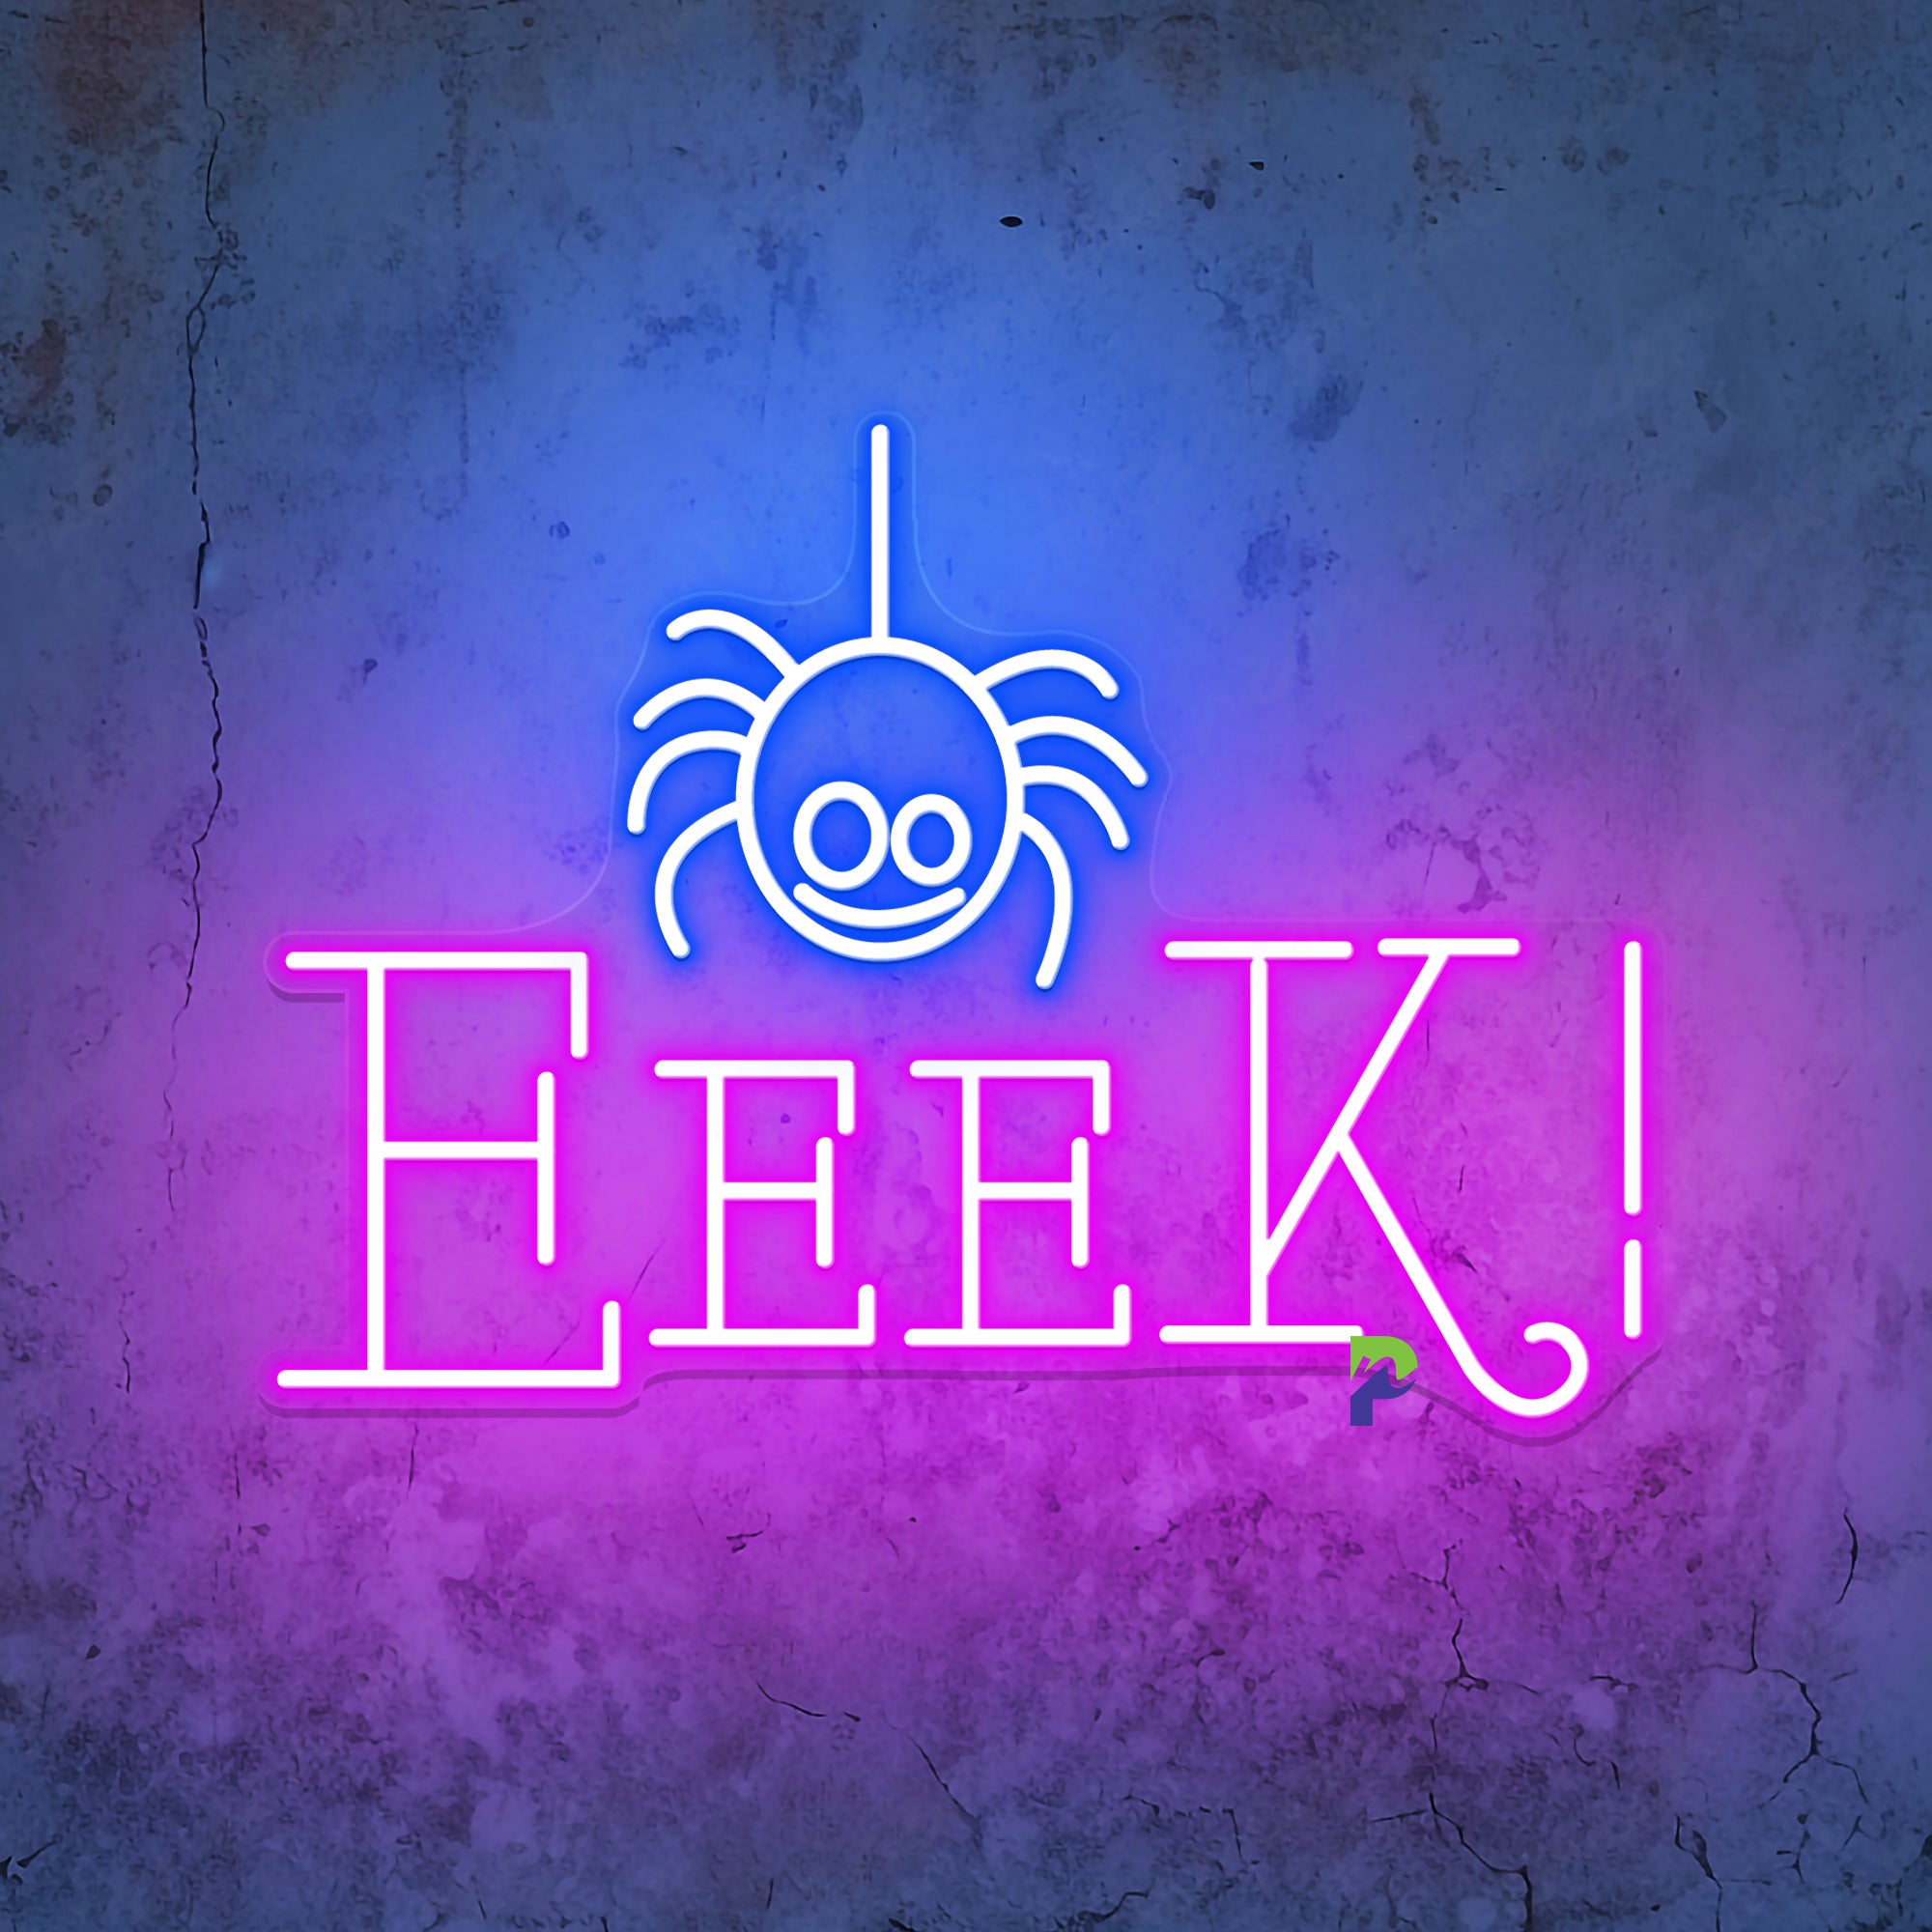 Eek Neon Spider Sign Led Light For Halloween